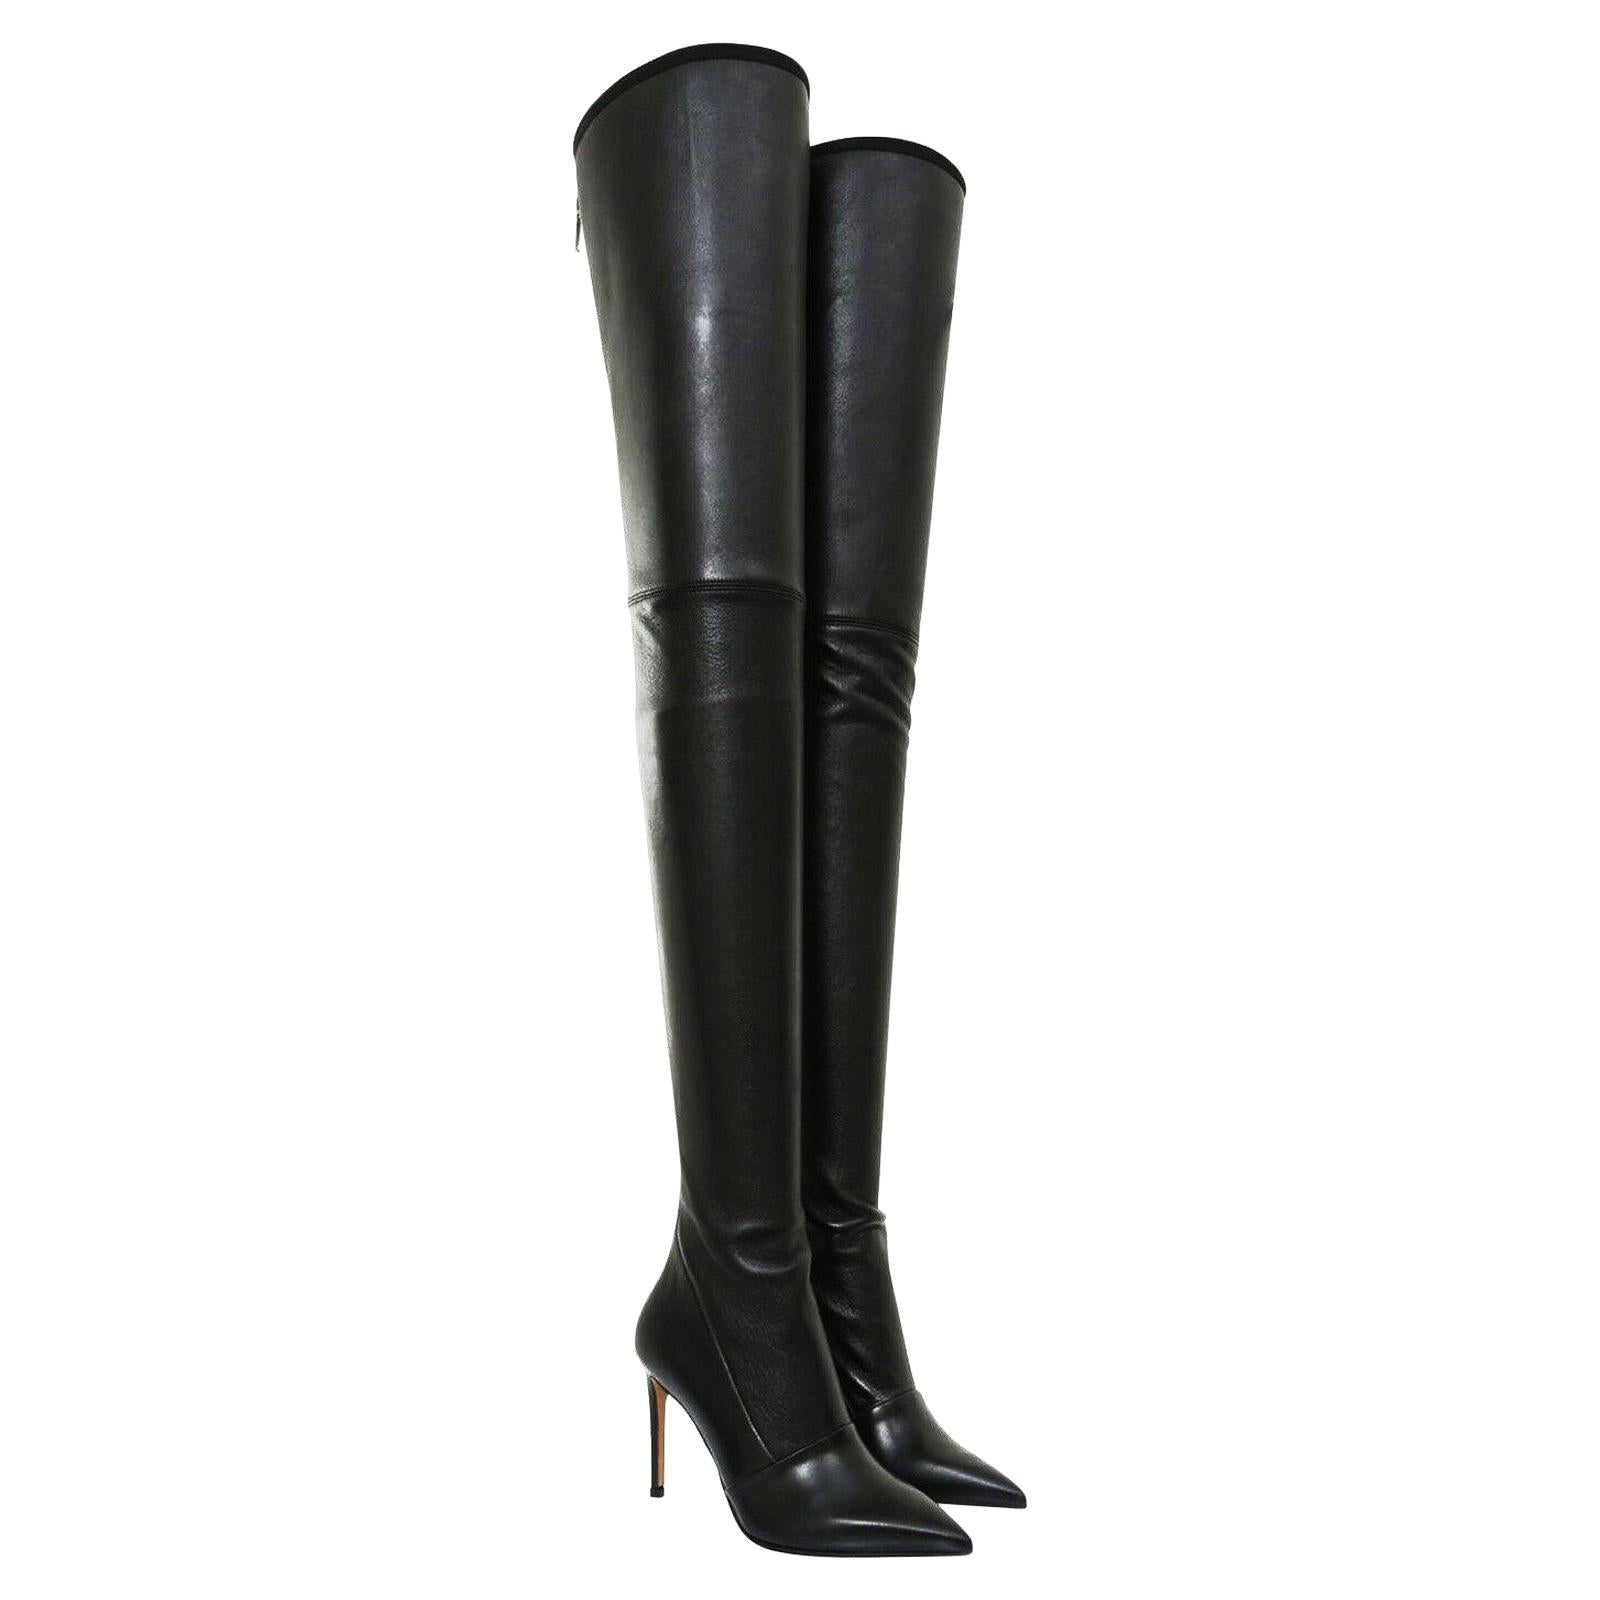 New Balmain Black Stretch Leather Thigh High Stiletto Heel Boots 6 7 7.5 8 8.5 